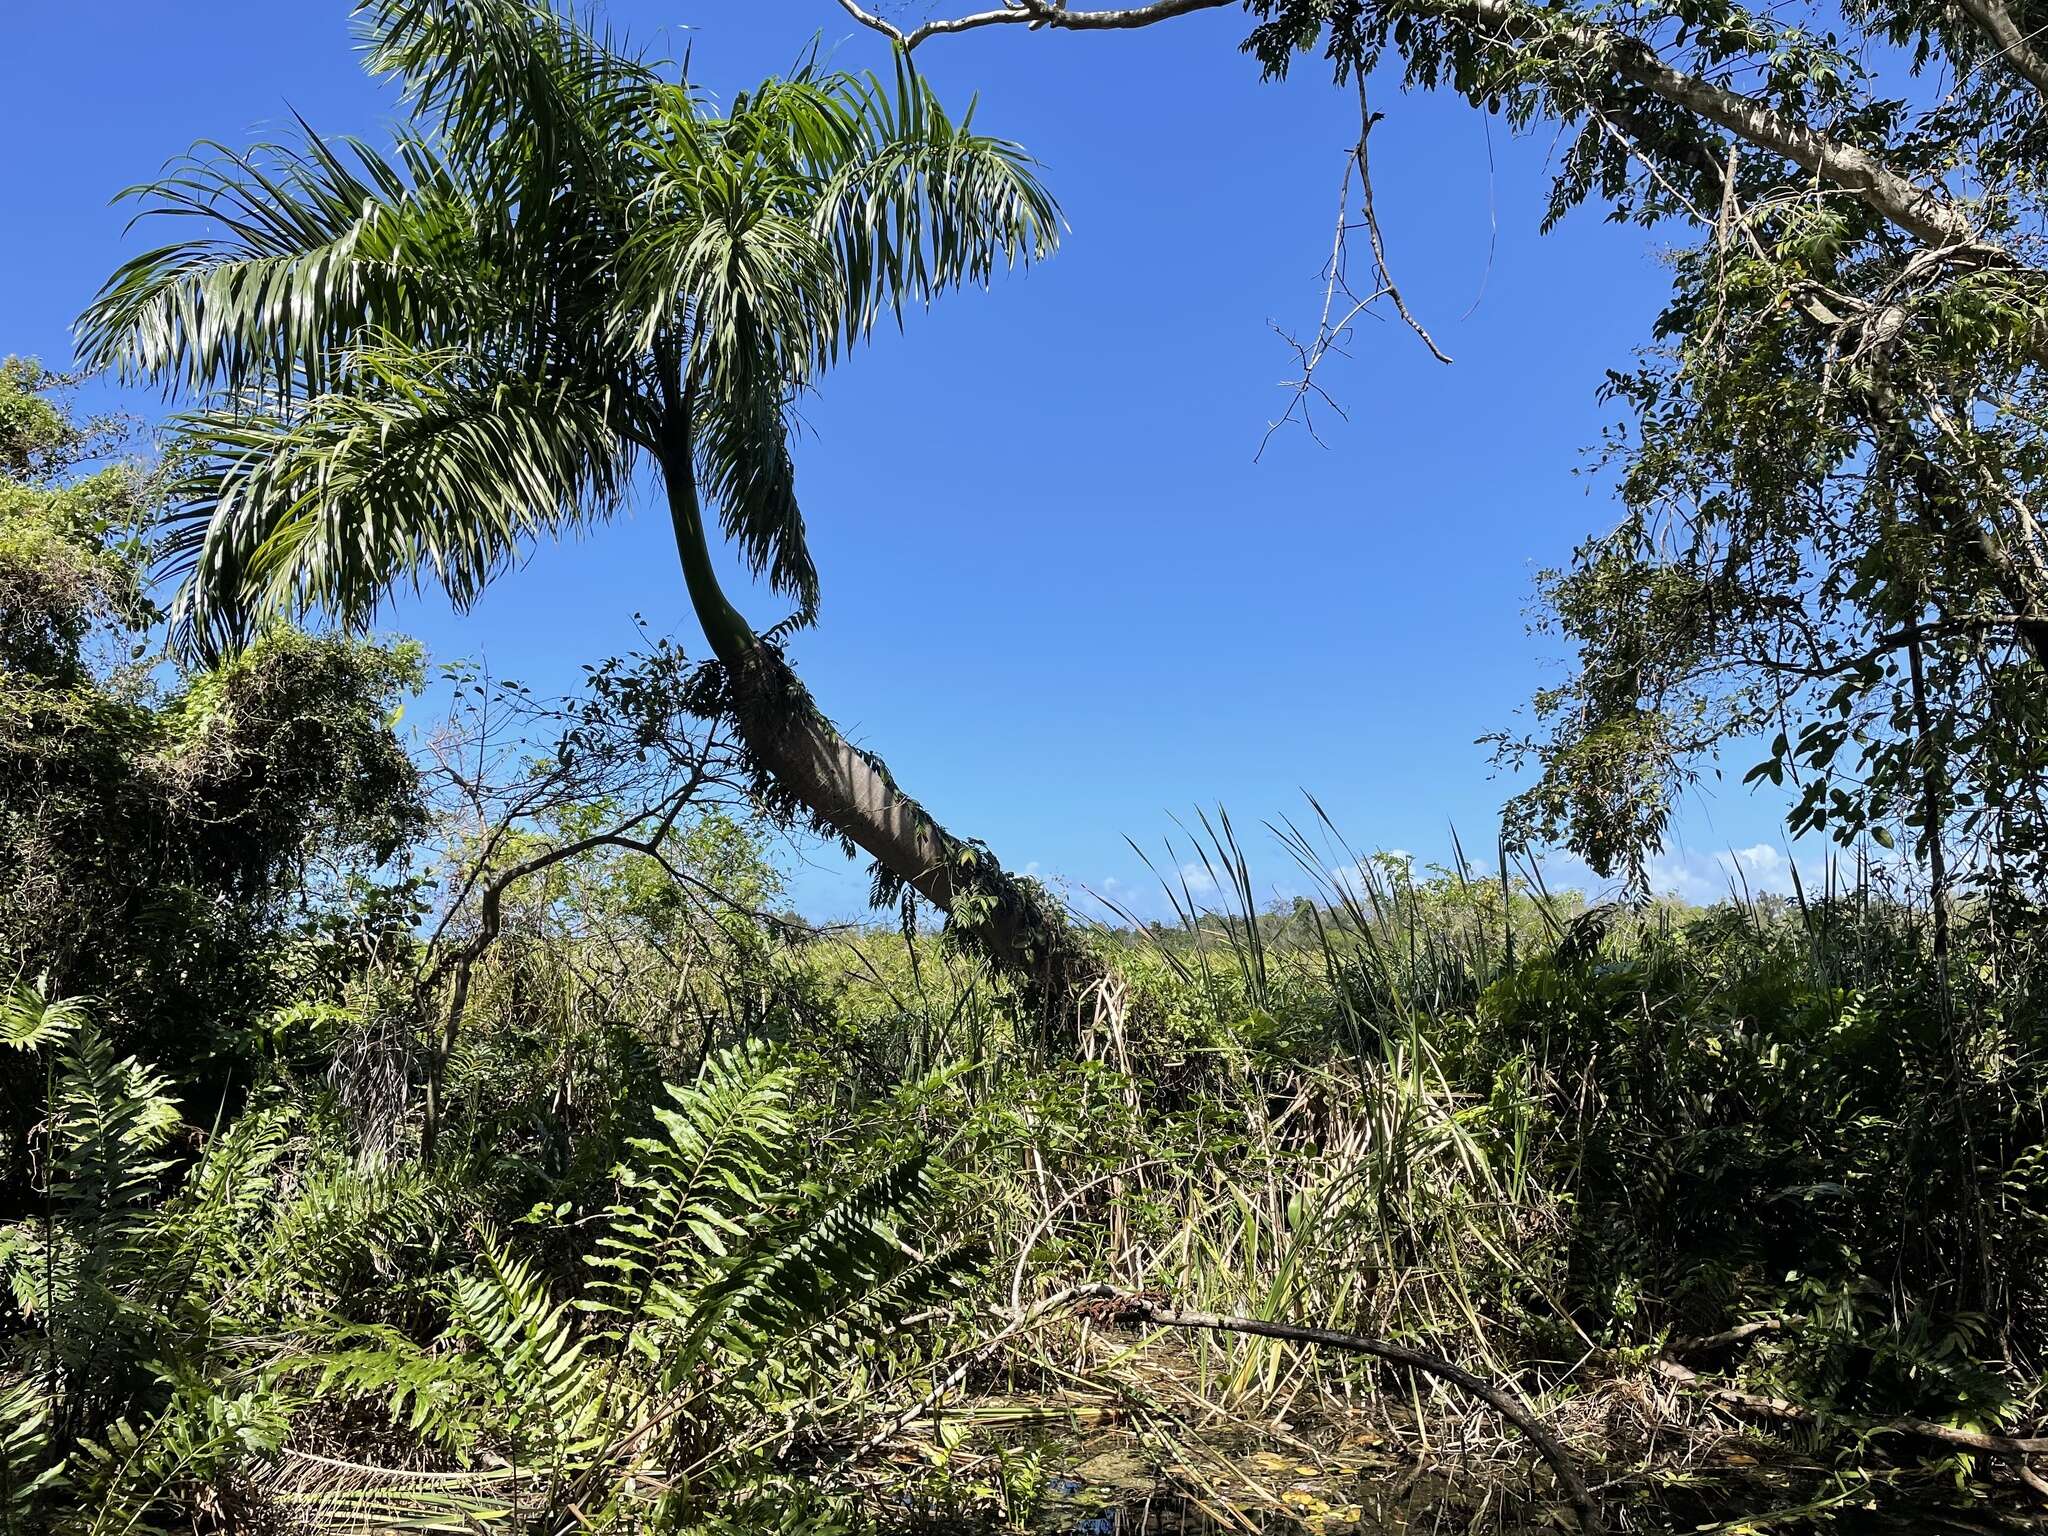 Image of Puerto Rico royal palm